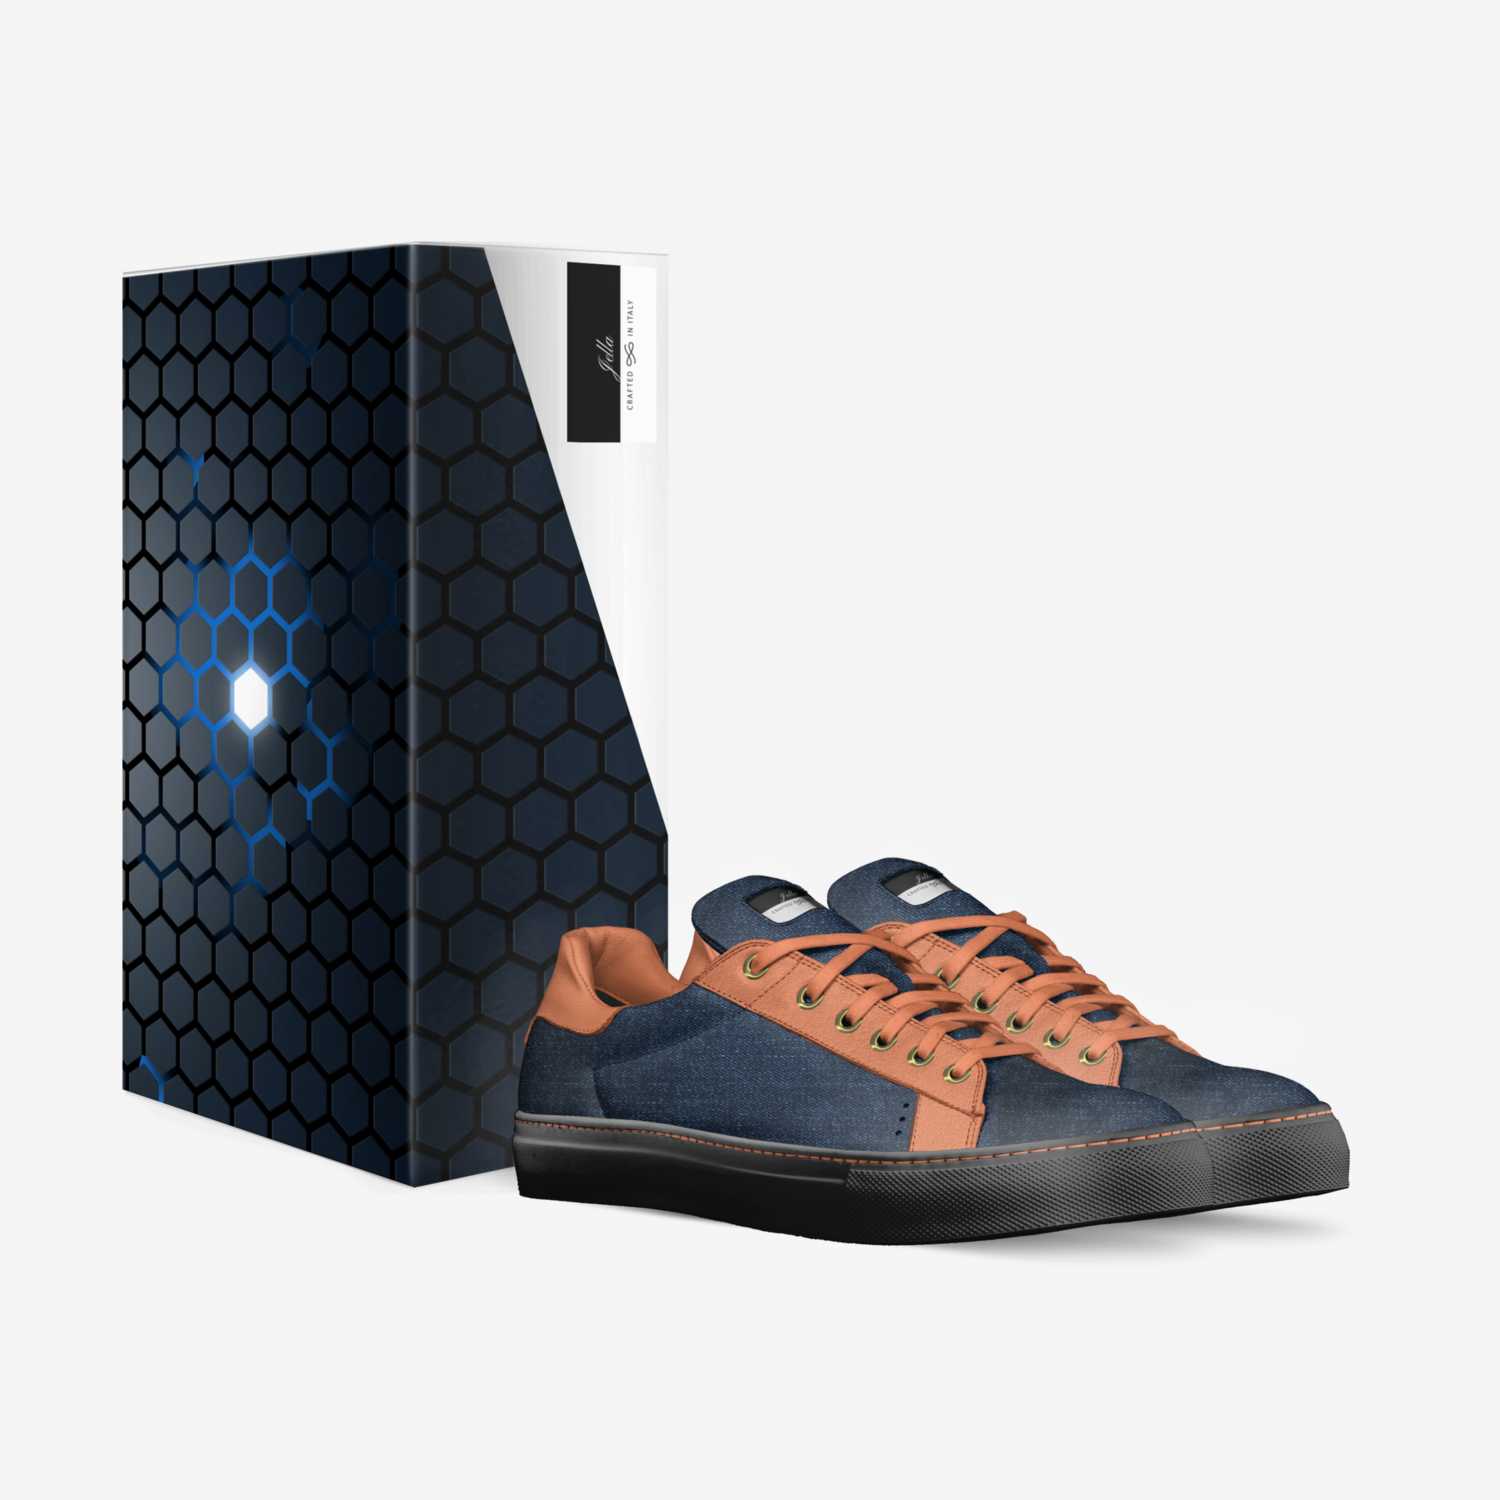 Alpha custom made in Italy shoes by John Koly | Box view